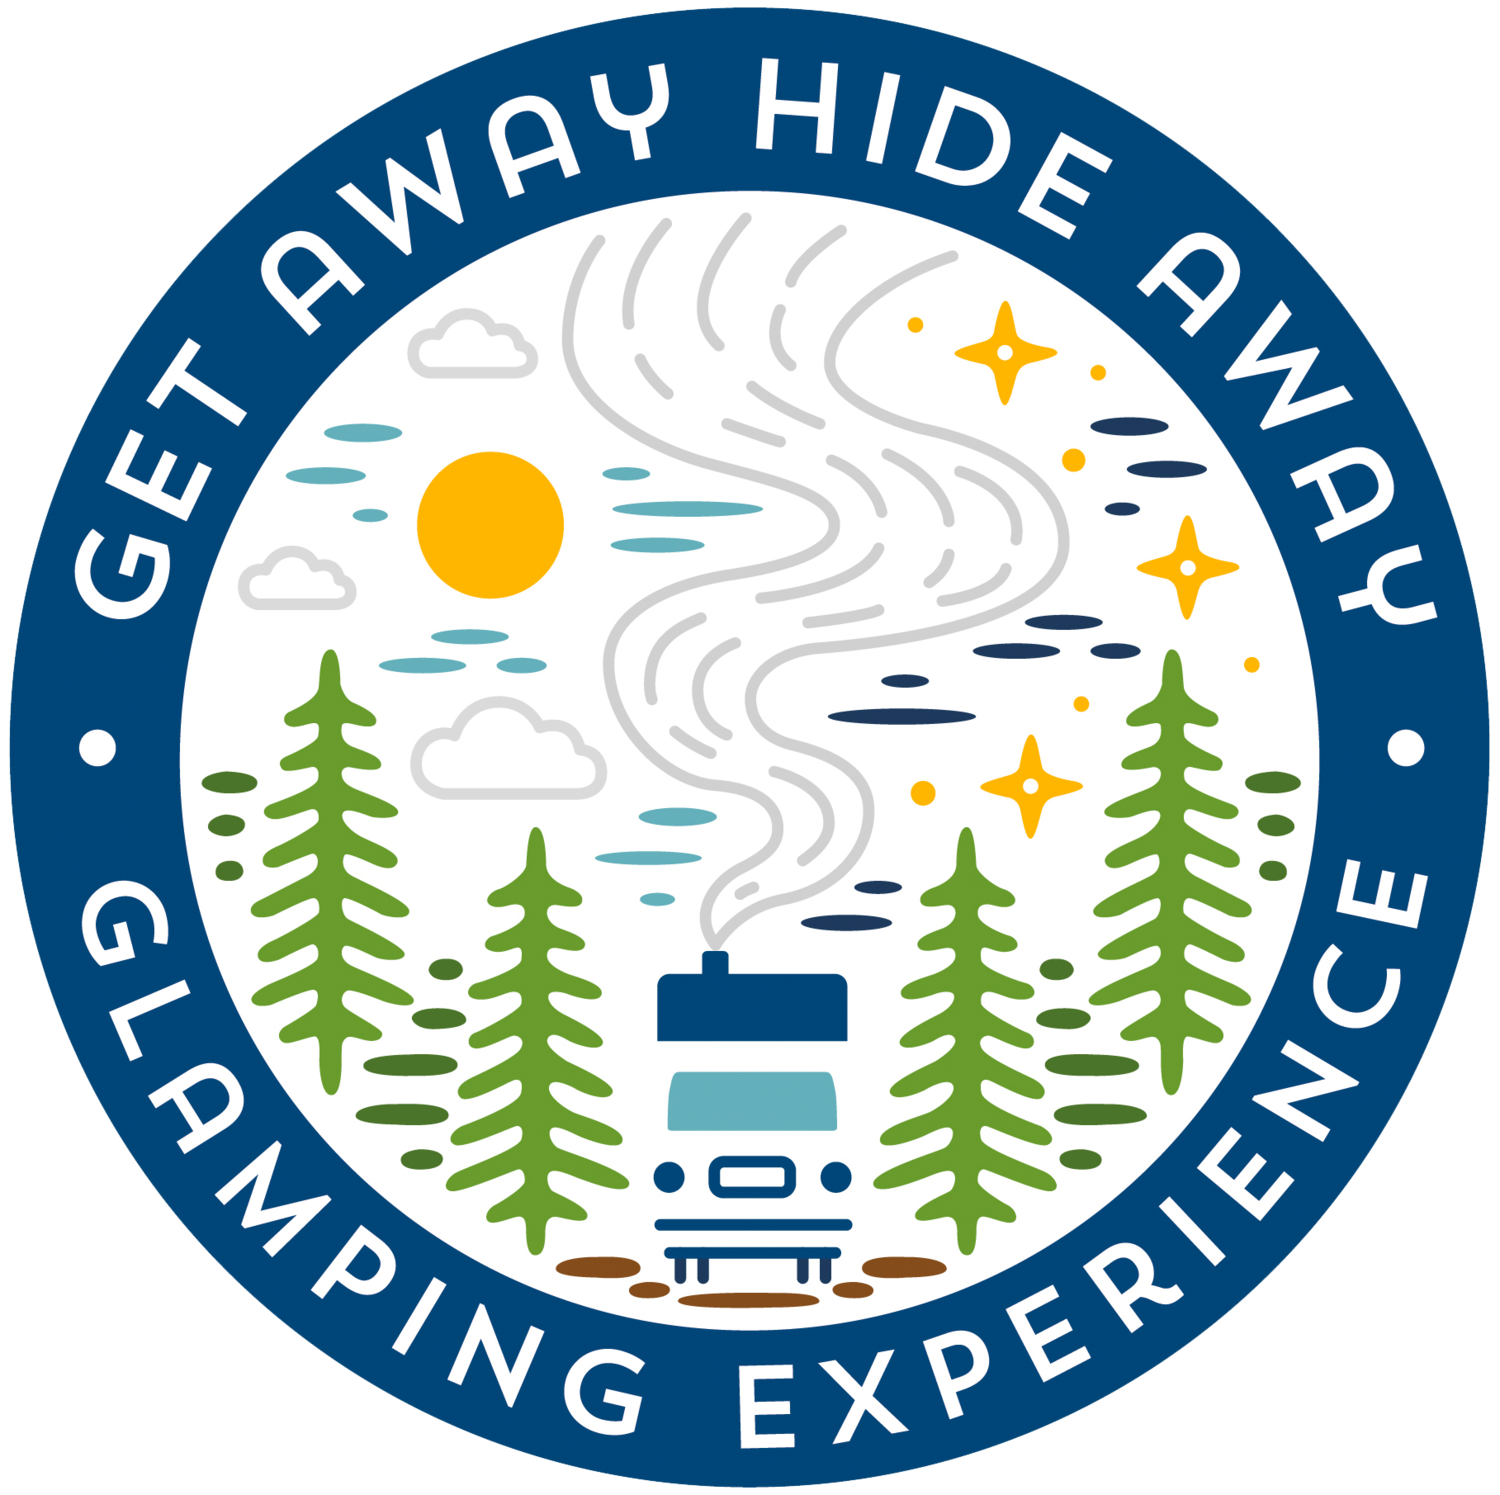 Get Away Hide Away - Glamping Experience 